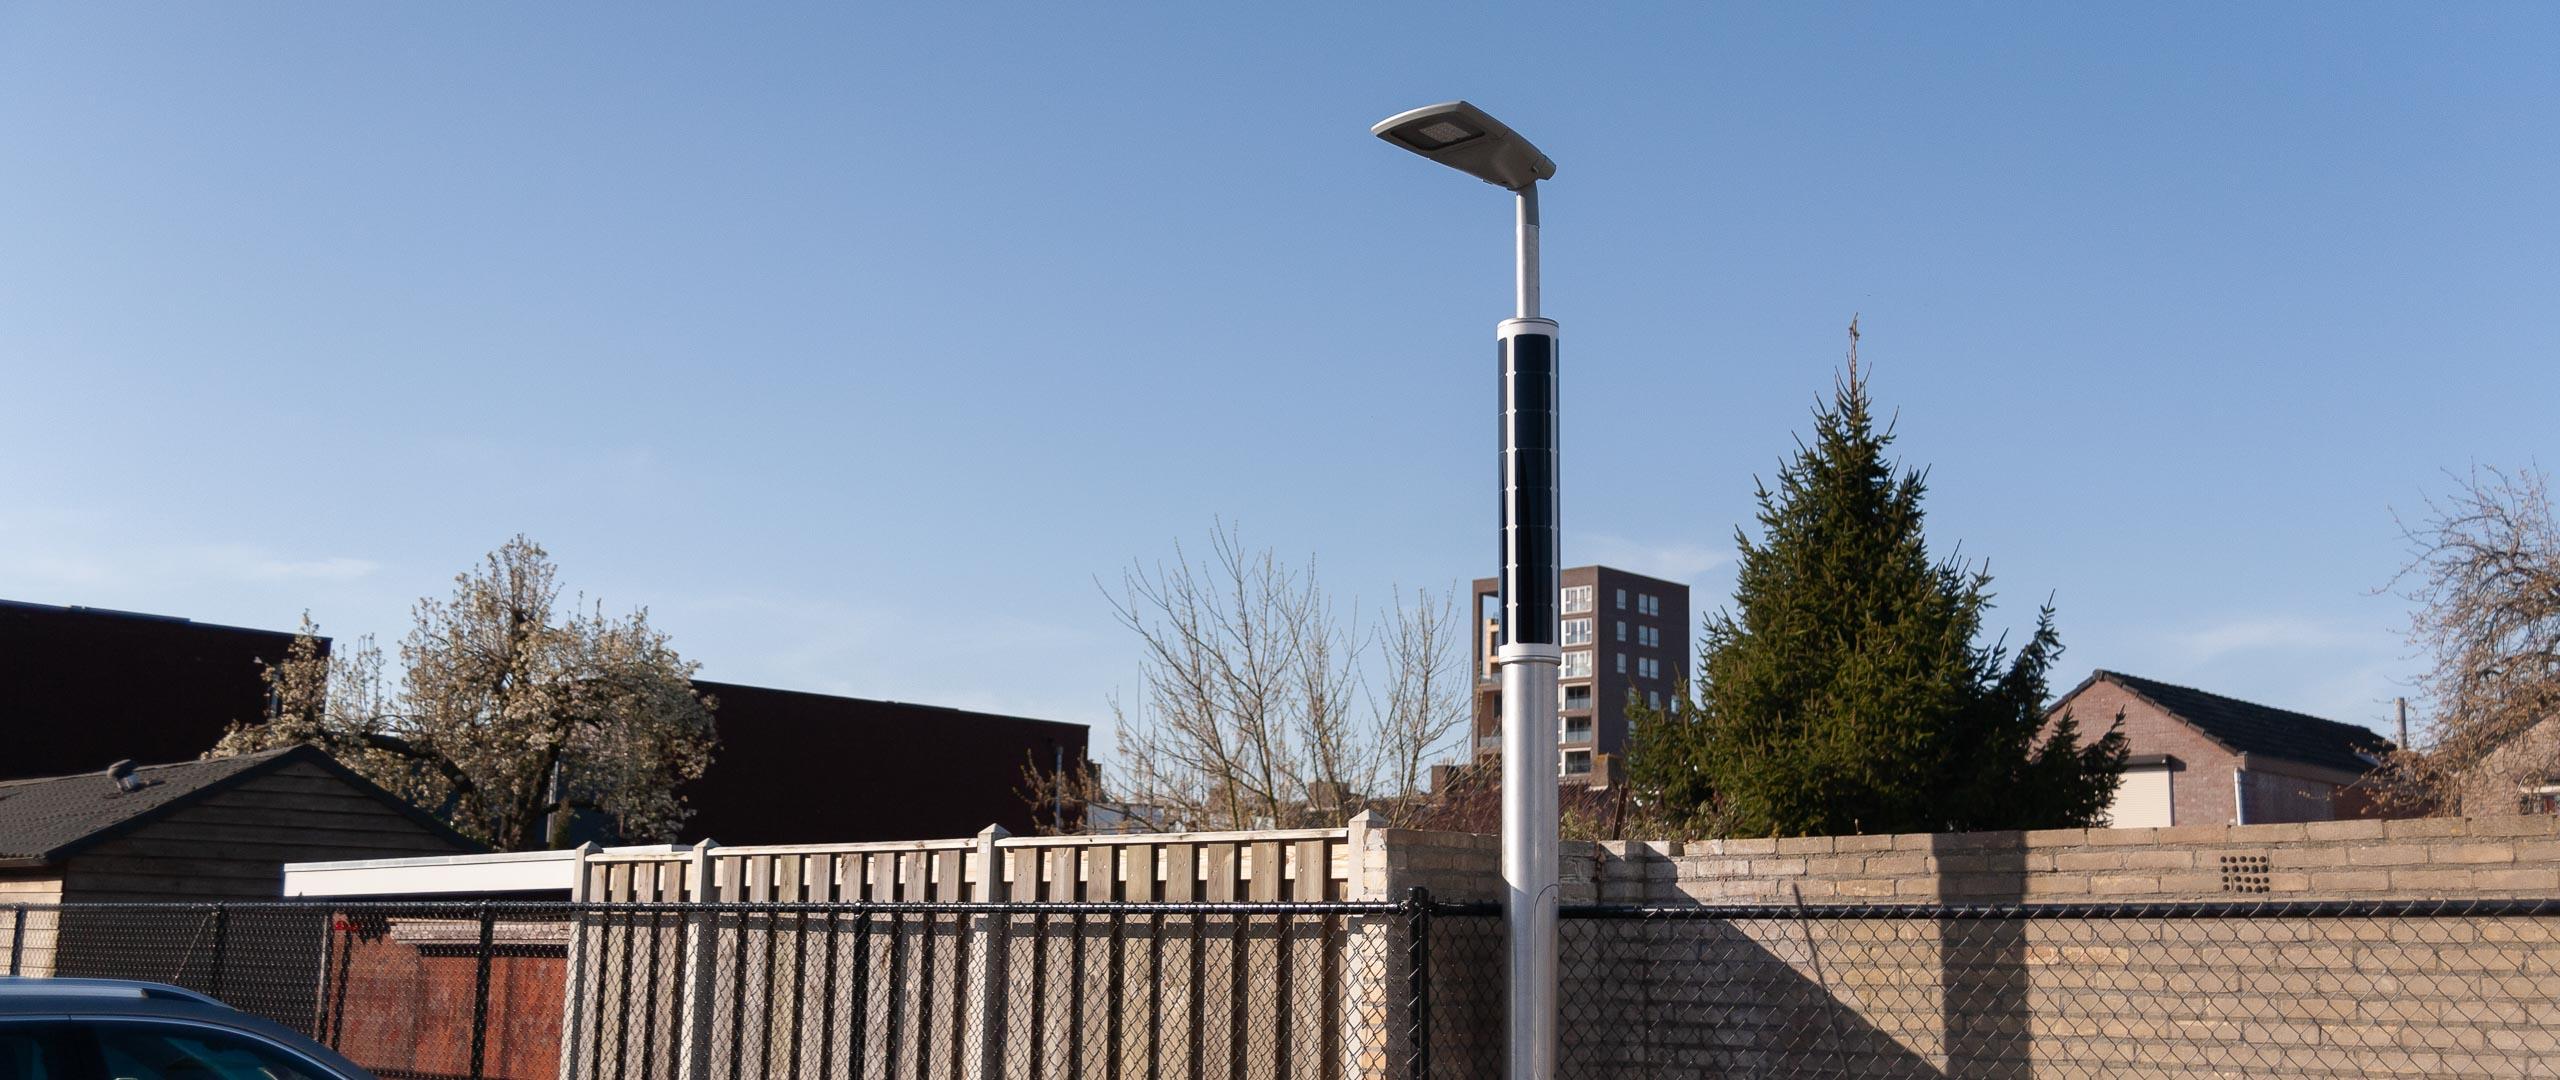 Soluxio parkeerplaatsverlichting op zonne-energie in Roosendaal, Nederland